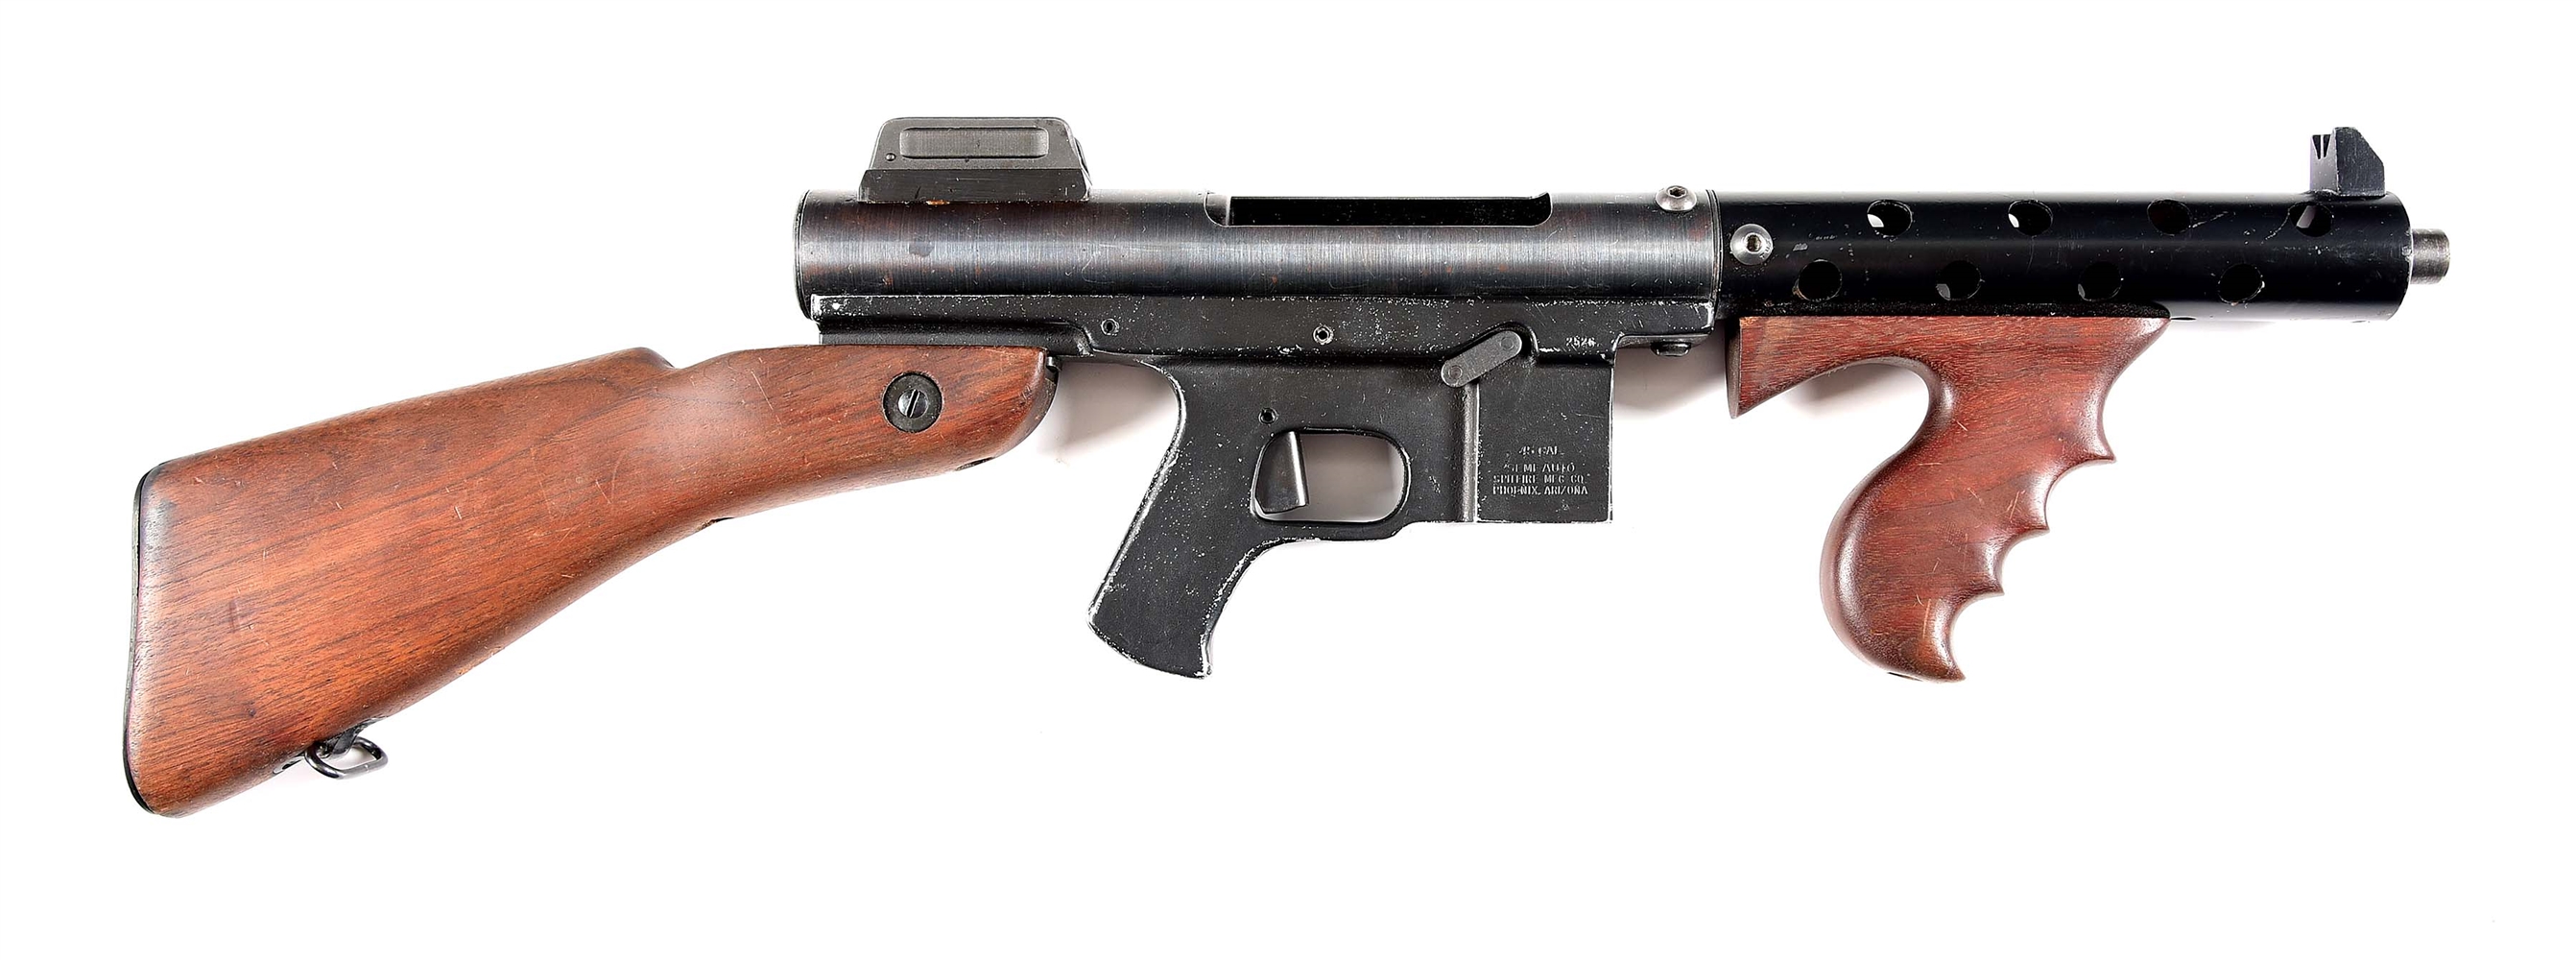 (N) SPITFIRE MFG CO THOMPSON MACHINE GUN LOOK-A-LIKE (FULLY TRANSFERABLE).  